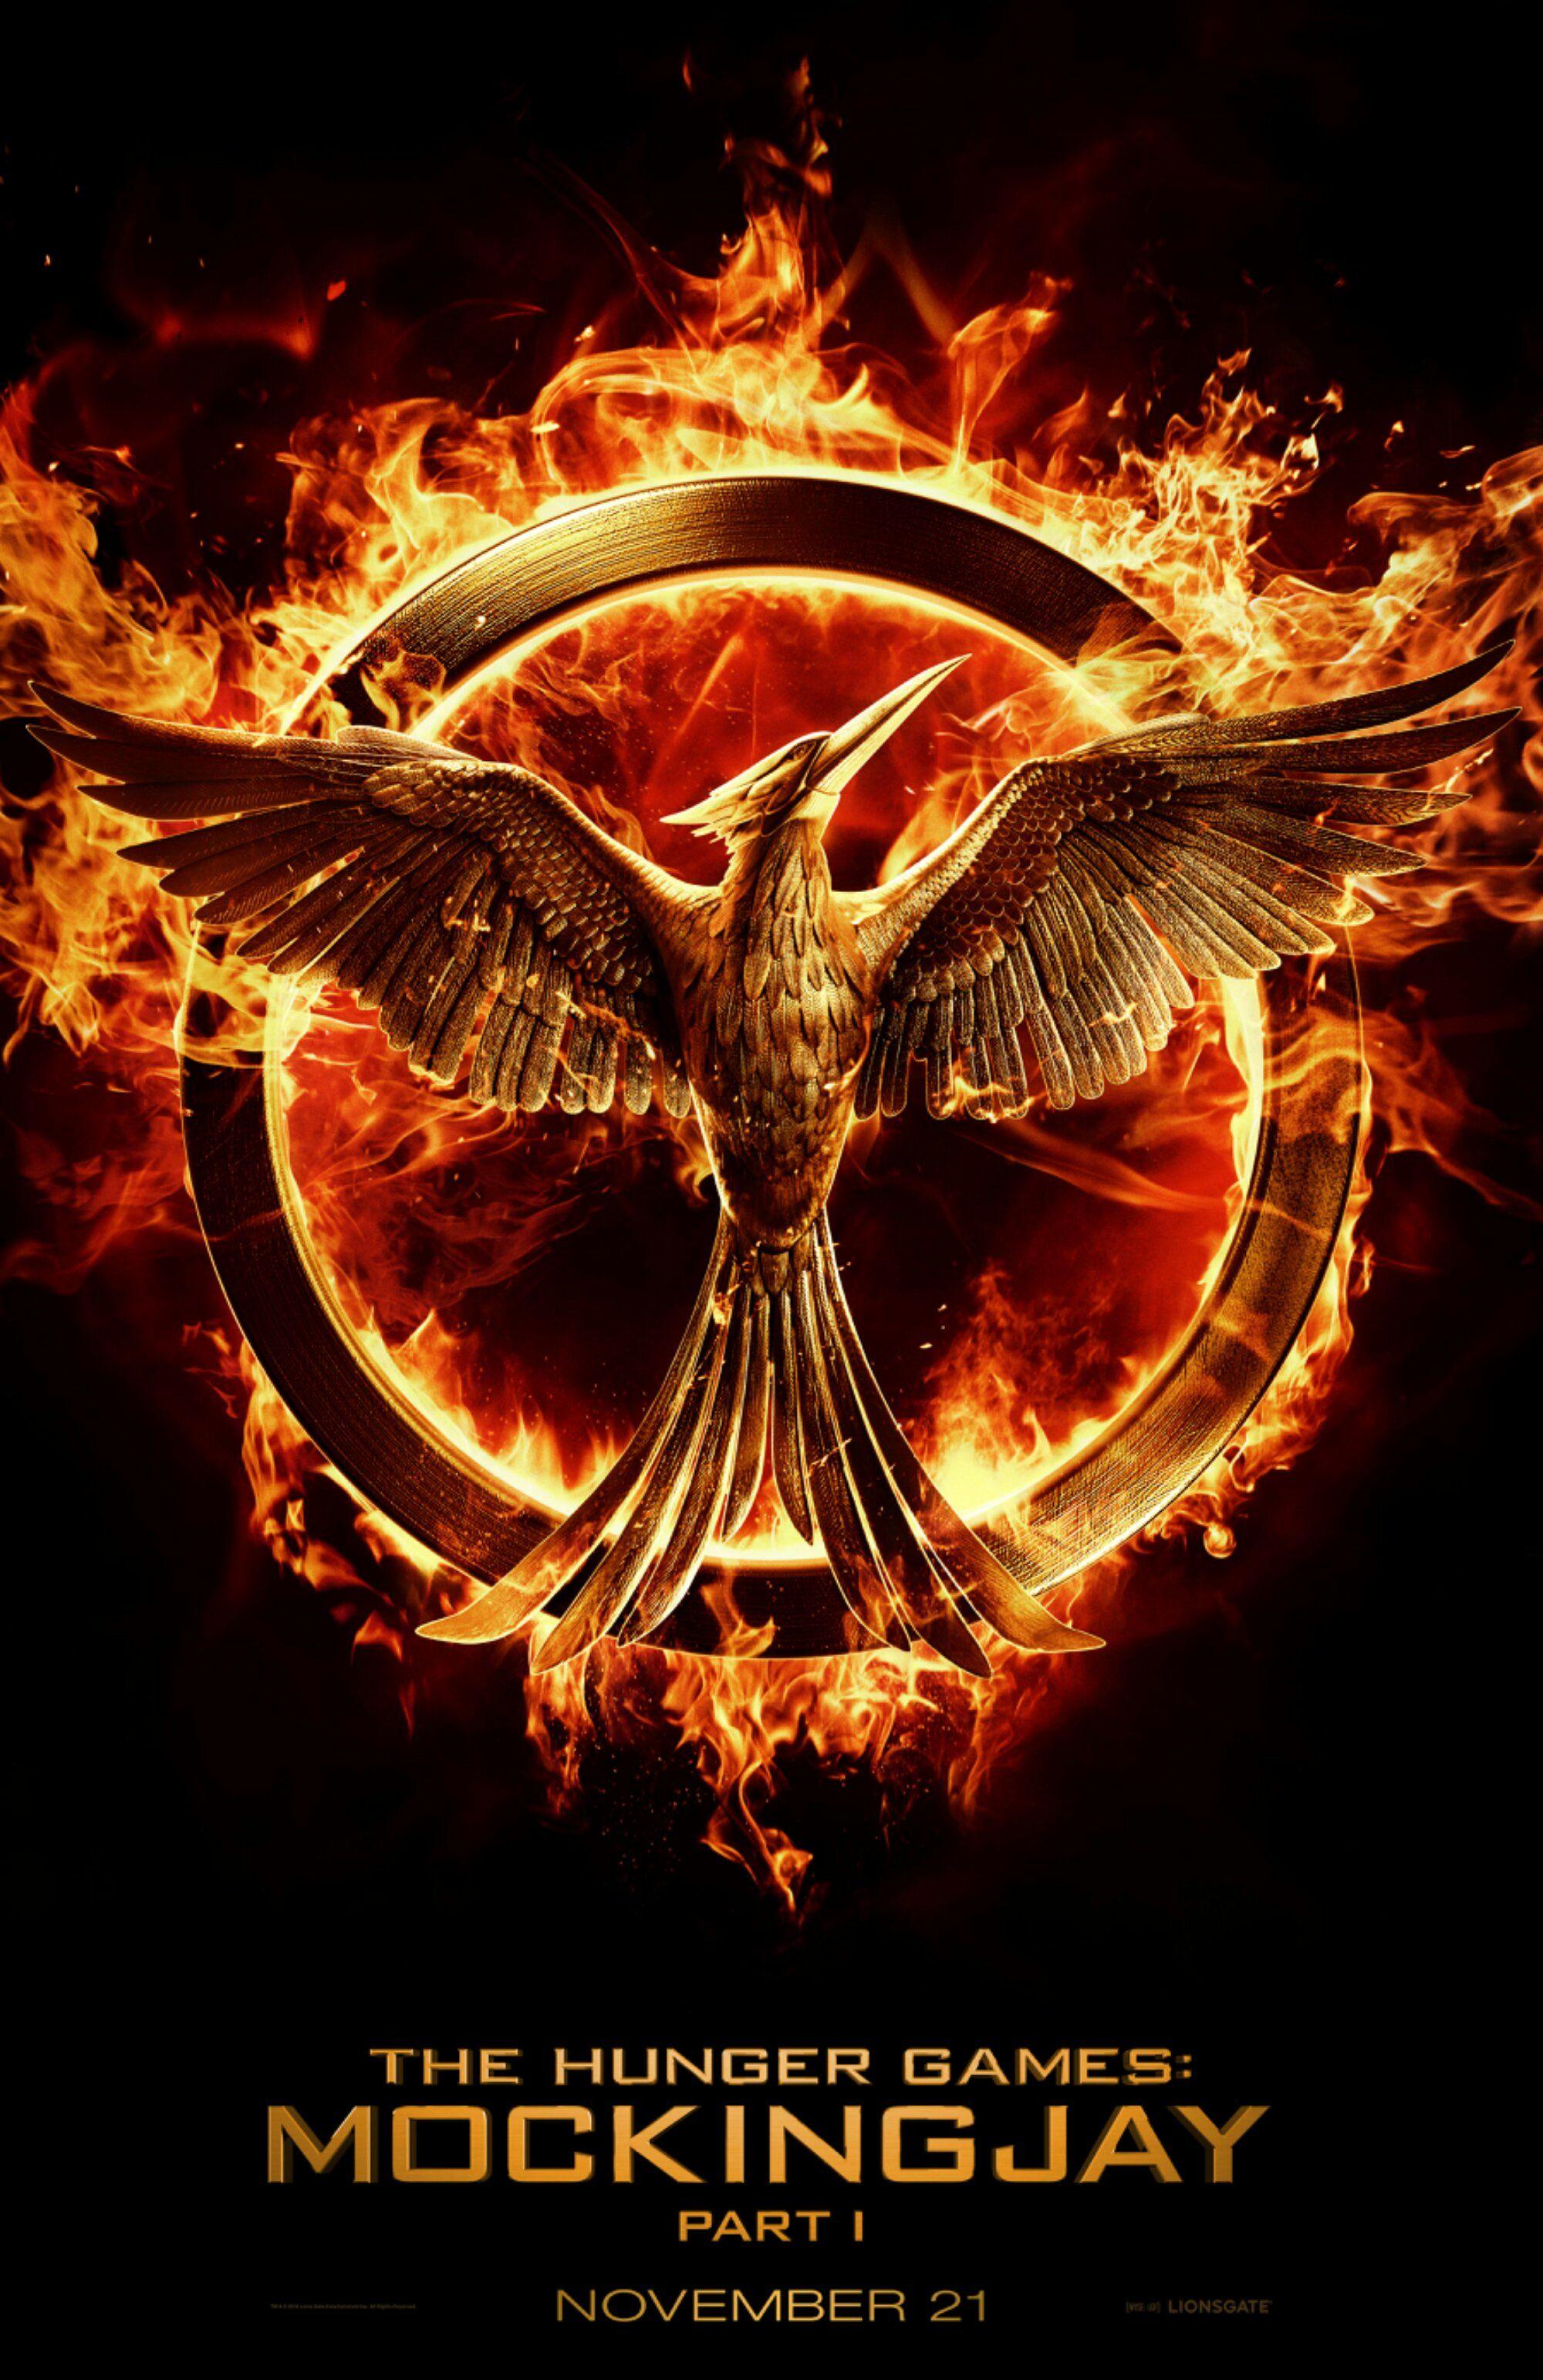 Hunger Games Logo - THE HUNGER GAMES: MOCKINGJAY PART 1 Logo Revealed | The Fandom